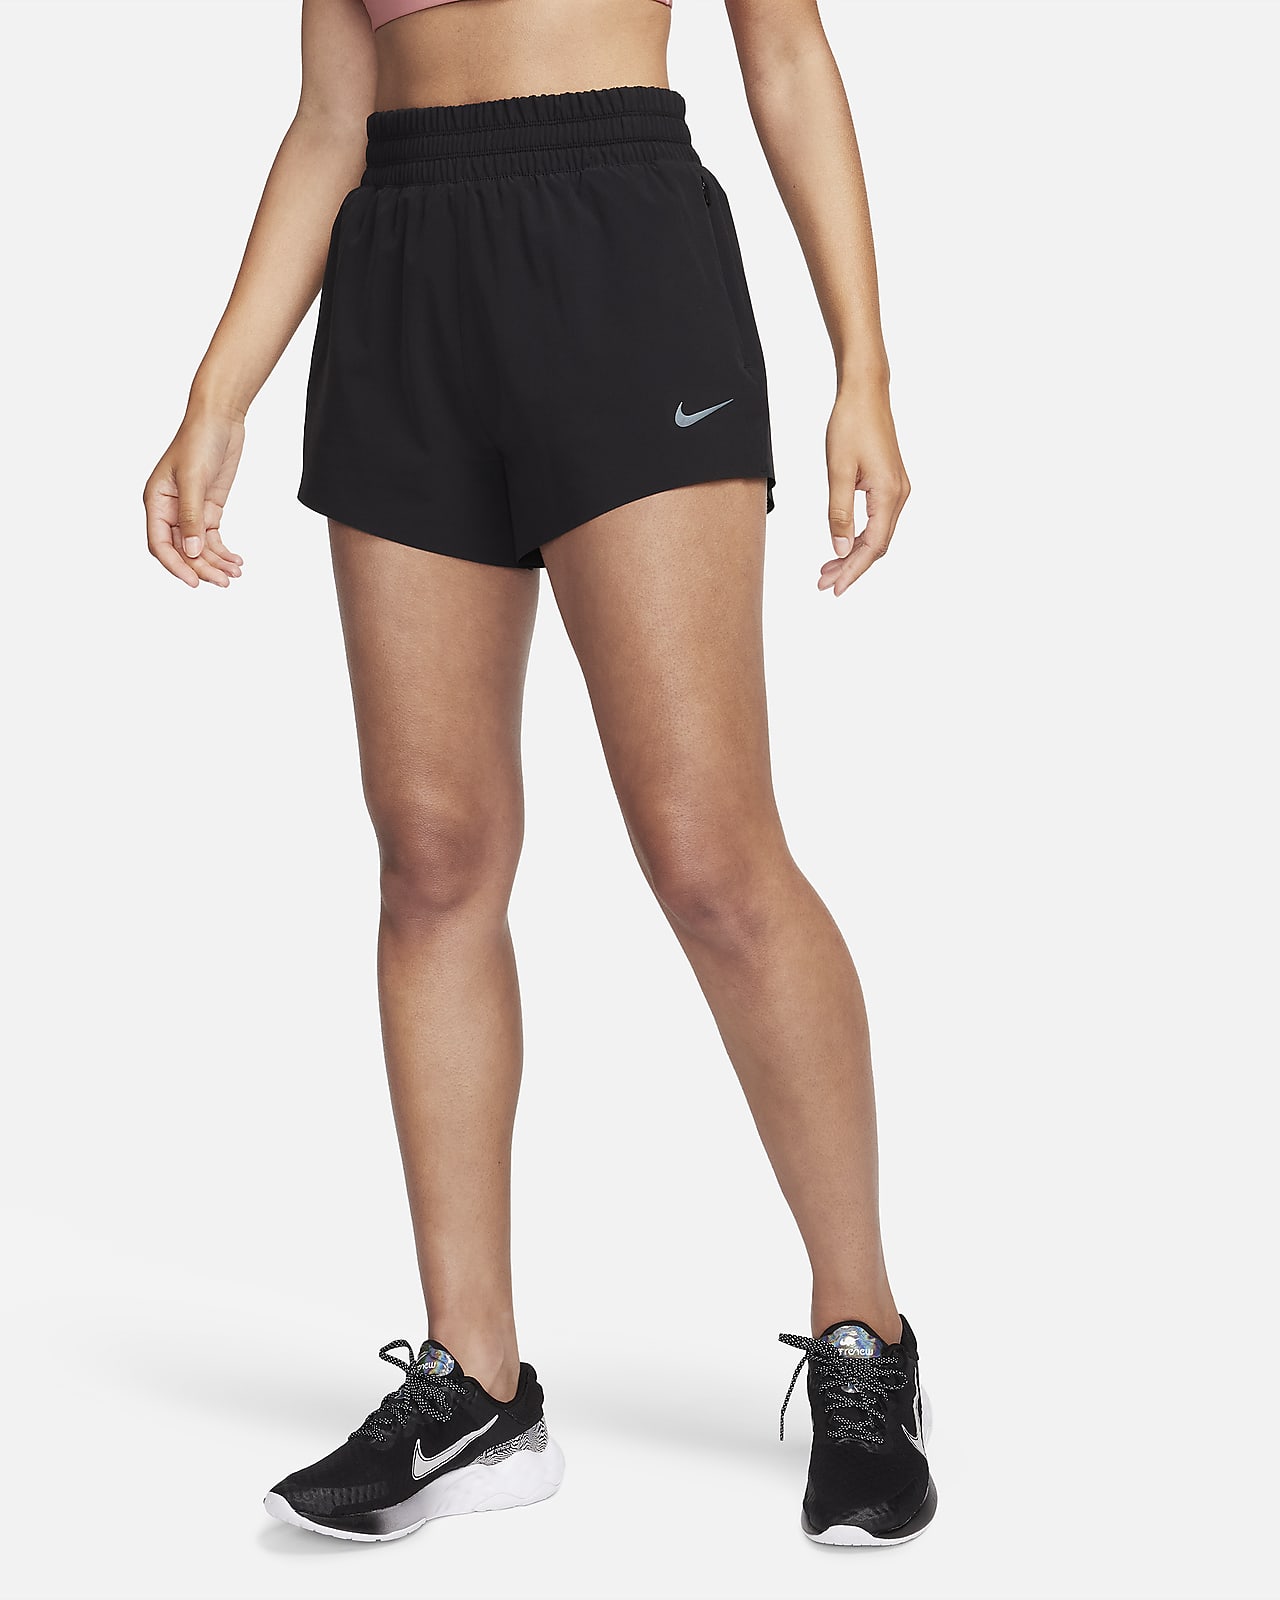 Women's Nike Dri-Fit Eclipse Running Shorts (Plus Size) Size 1X DM3472 601